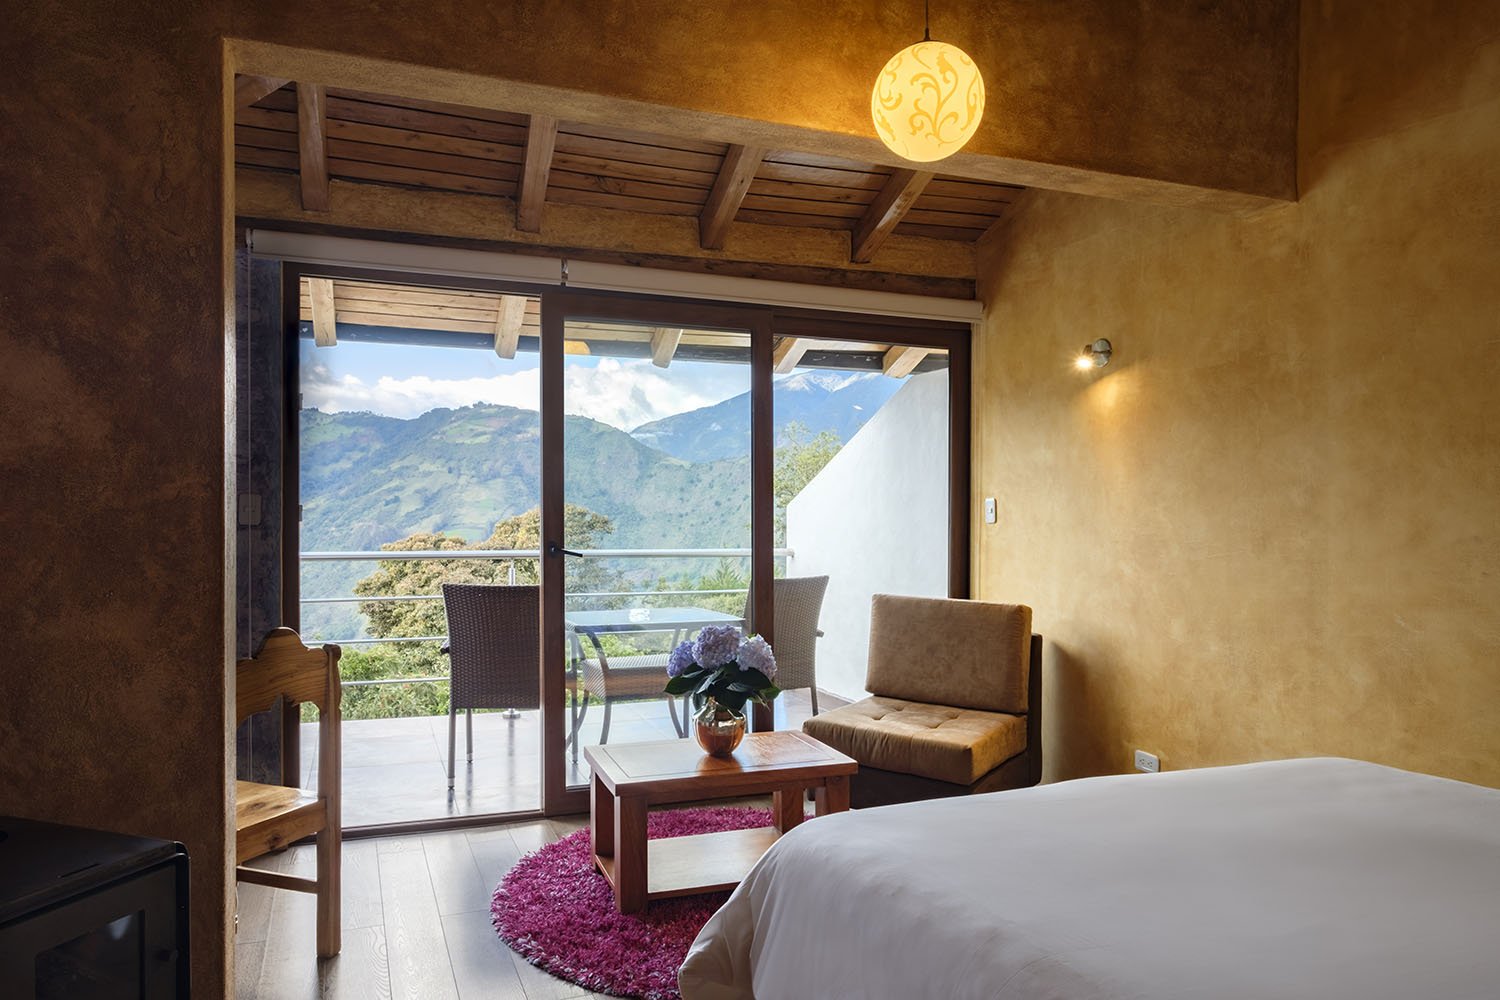 Terrace Romantic Room Arcoiris 56 - Luna Volcan - Hotel en Banos Ecuador.jpg